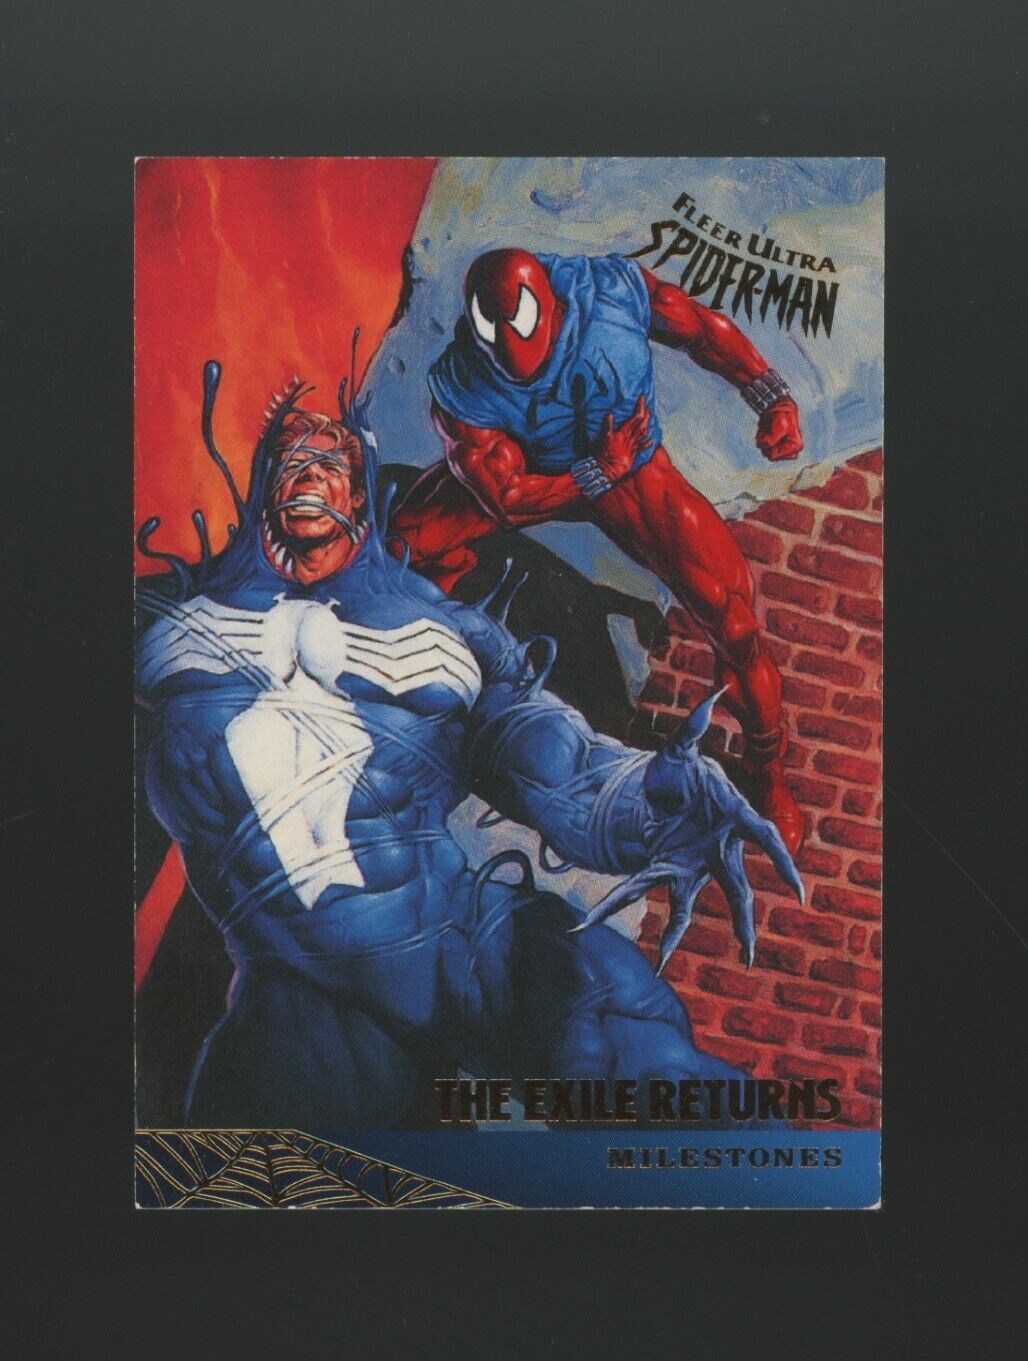 1995 FLEER ULTRA SPIDER-MAN THE EXILE RETURNS  SCARLET SPIDER VS VENON CARD 94